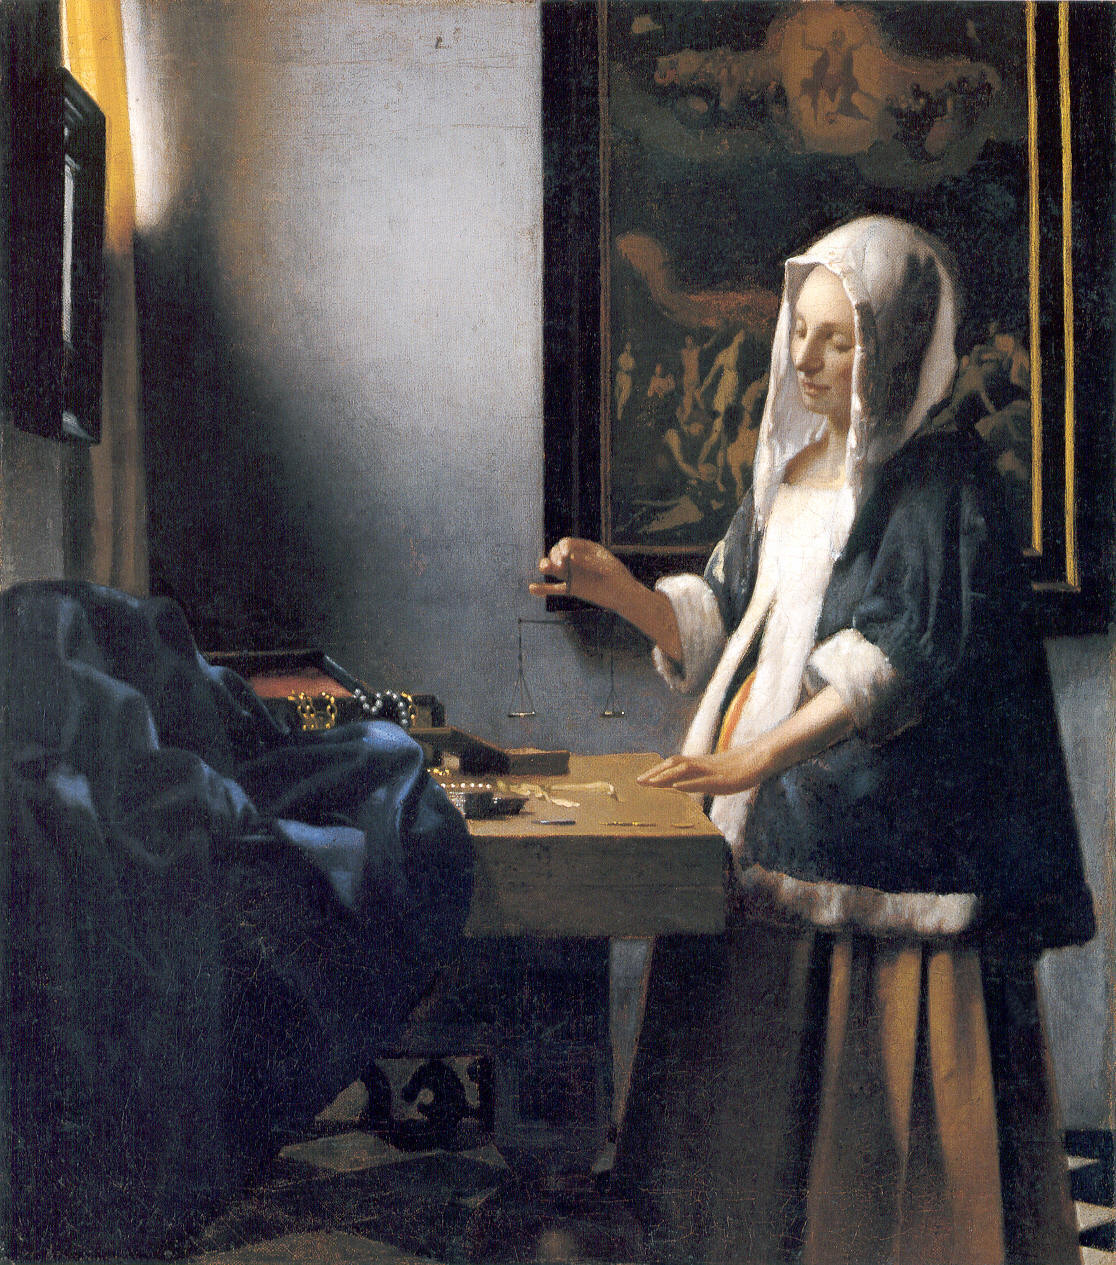 Vermeer, "Woman Holding a Balance," 1664, National Gallery of Art, Washington, D.C.